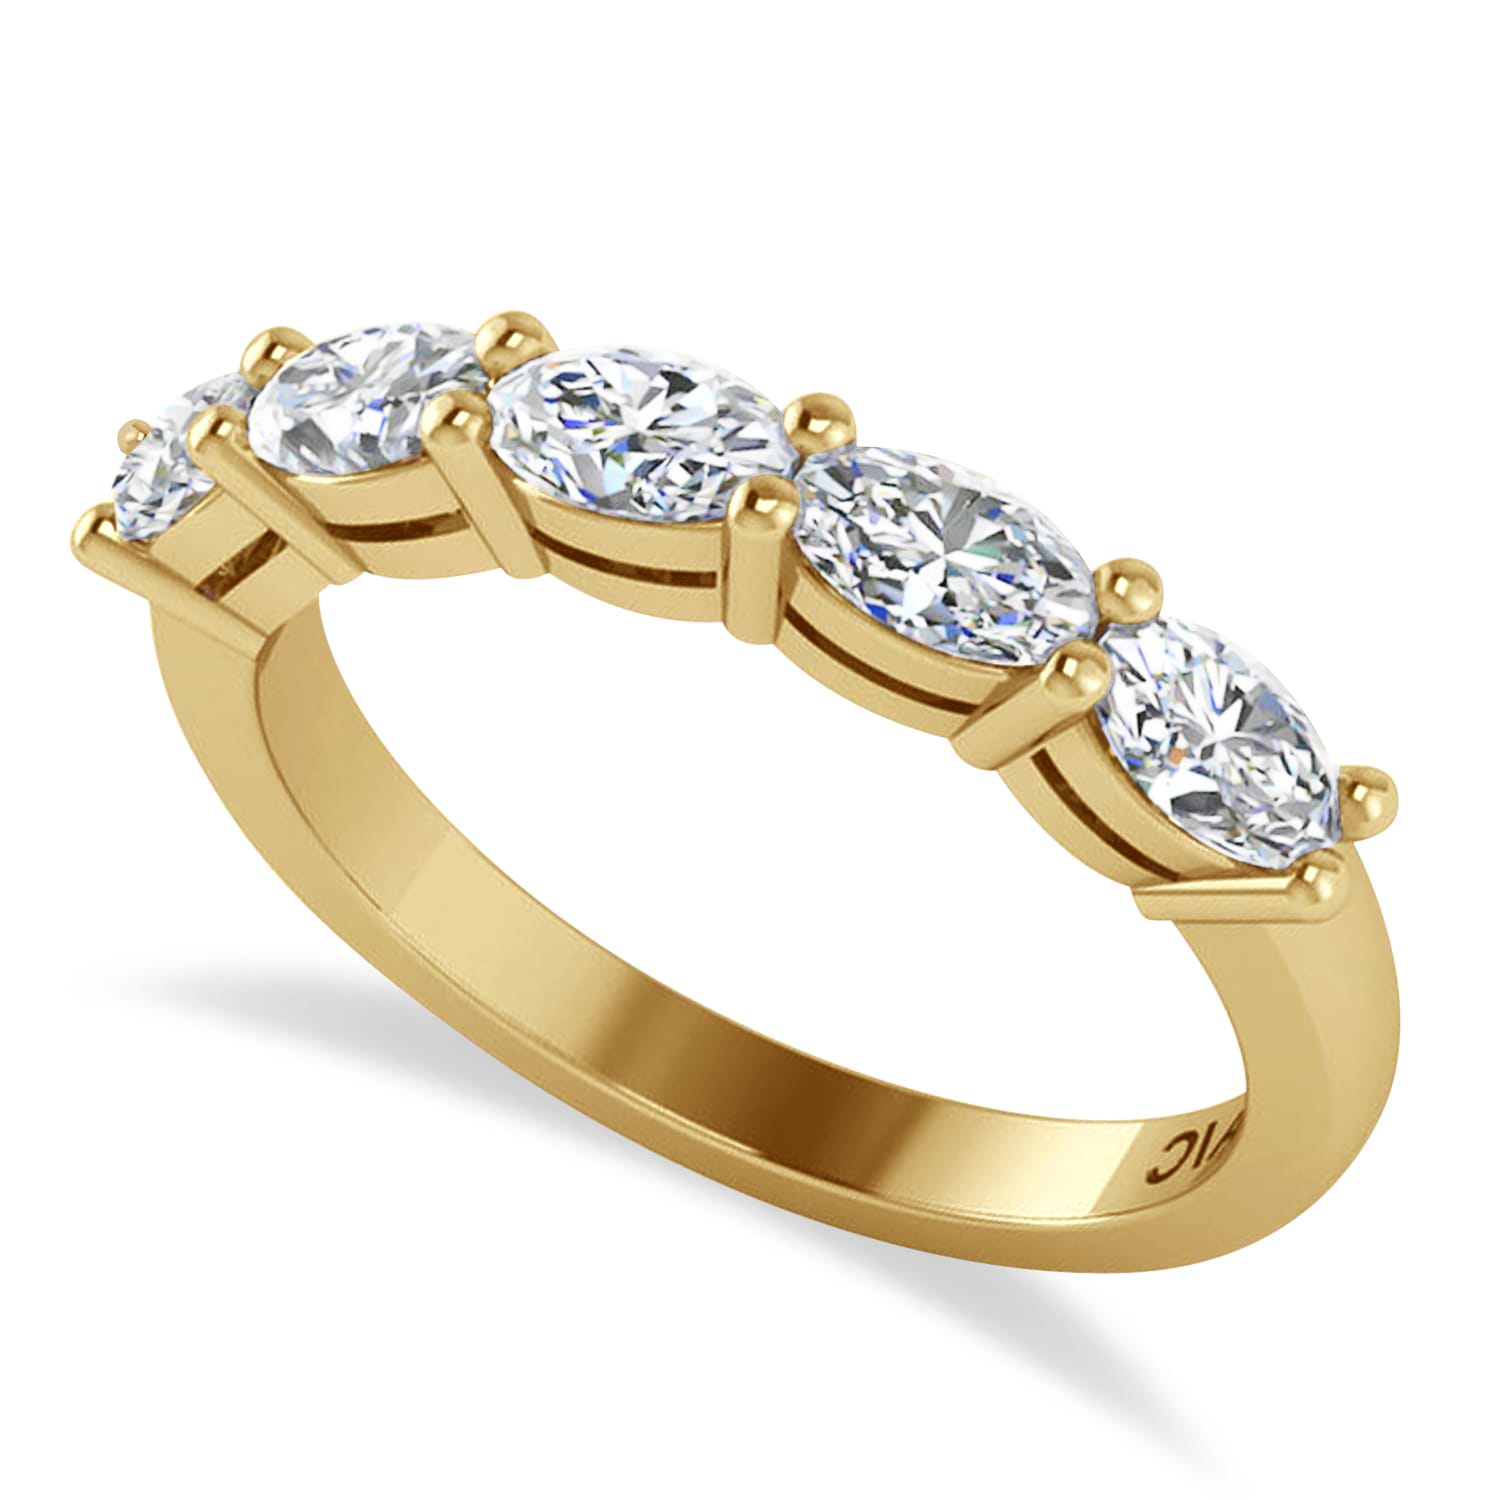 Oval Diamond Five Stone Wedding Band 14k Yellow Gold (1.25ct)